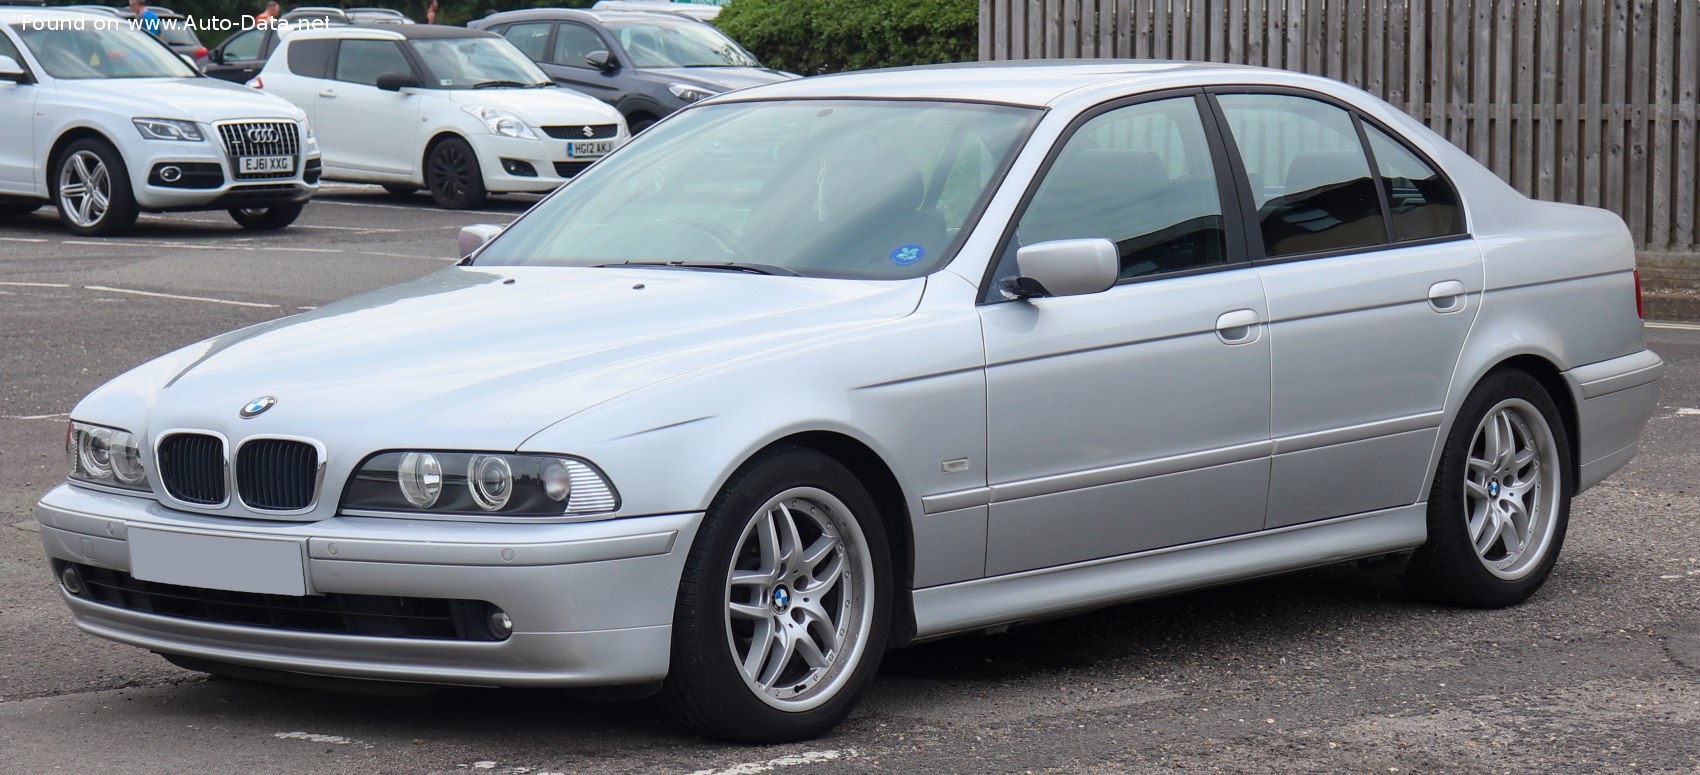 https://www.auto-data.net/images/f45/BMW-5-Series-E39-Facelift-2000.jpg